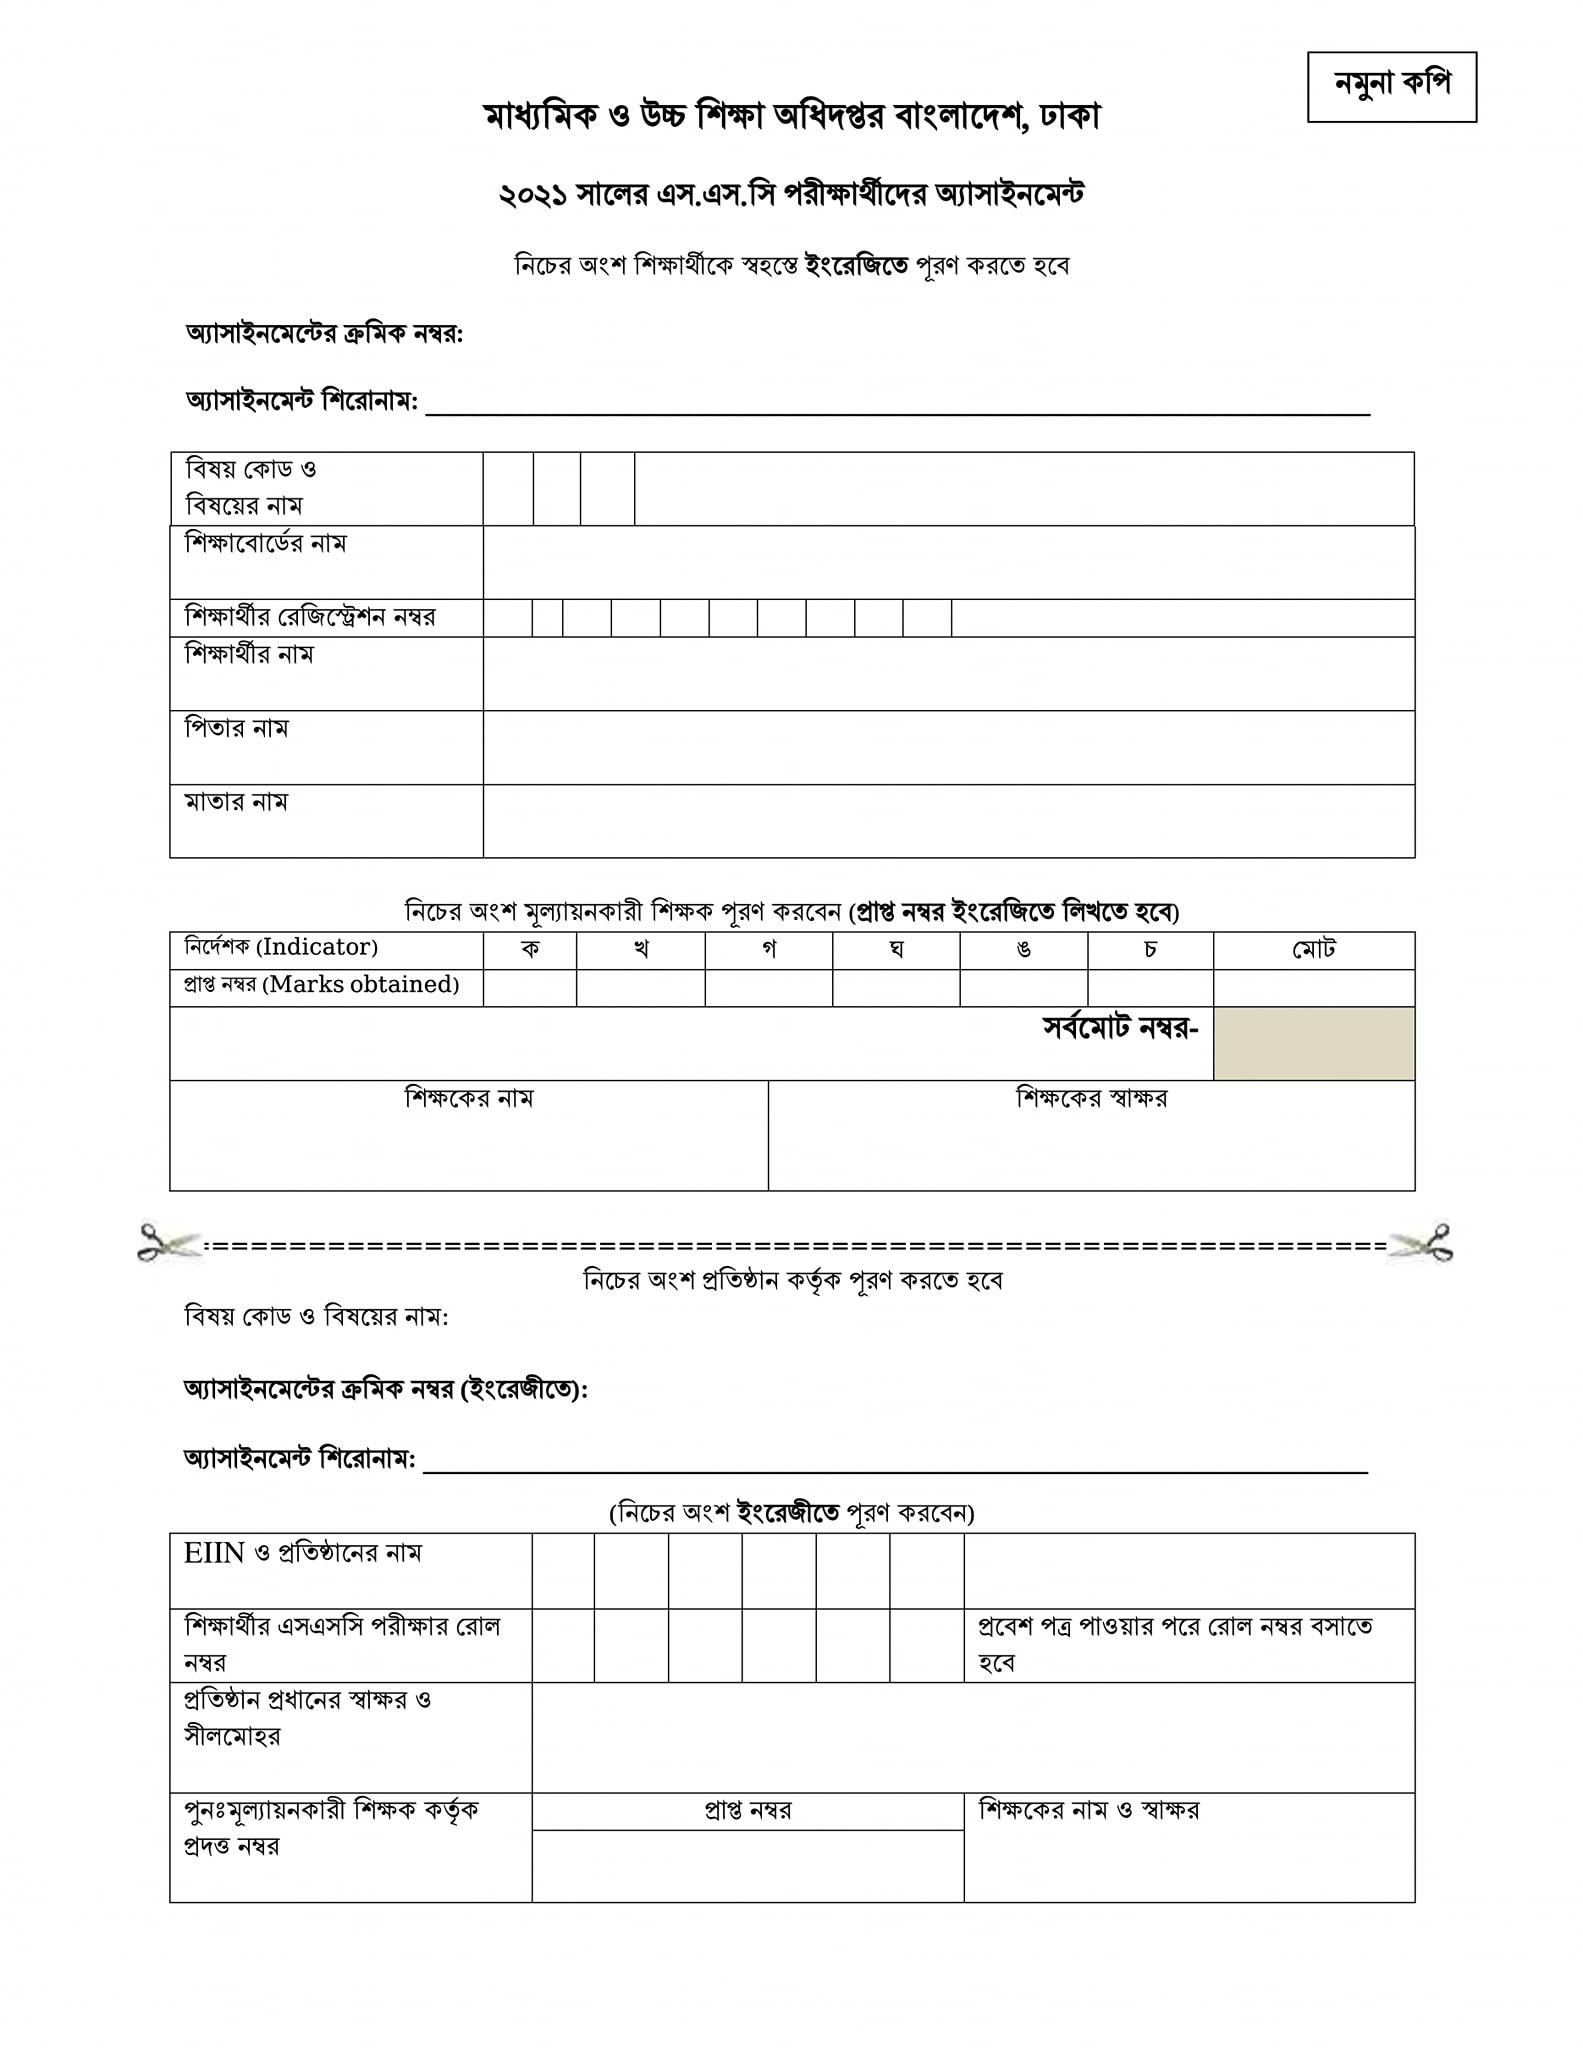 SSC Assignment Question Paper 2021 PDF Download Online Class 9-10 6